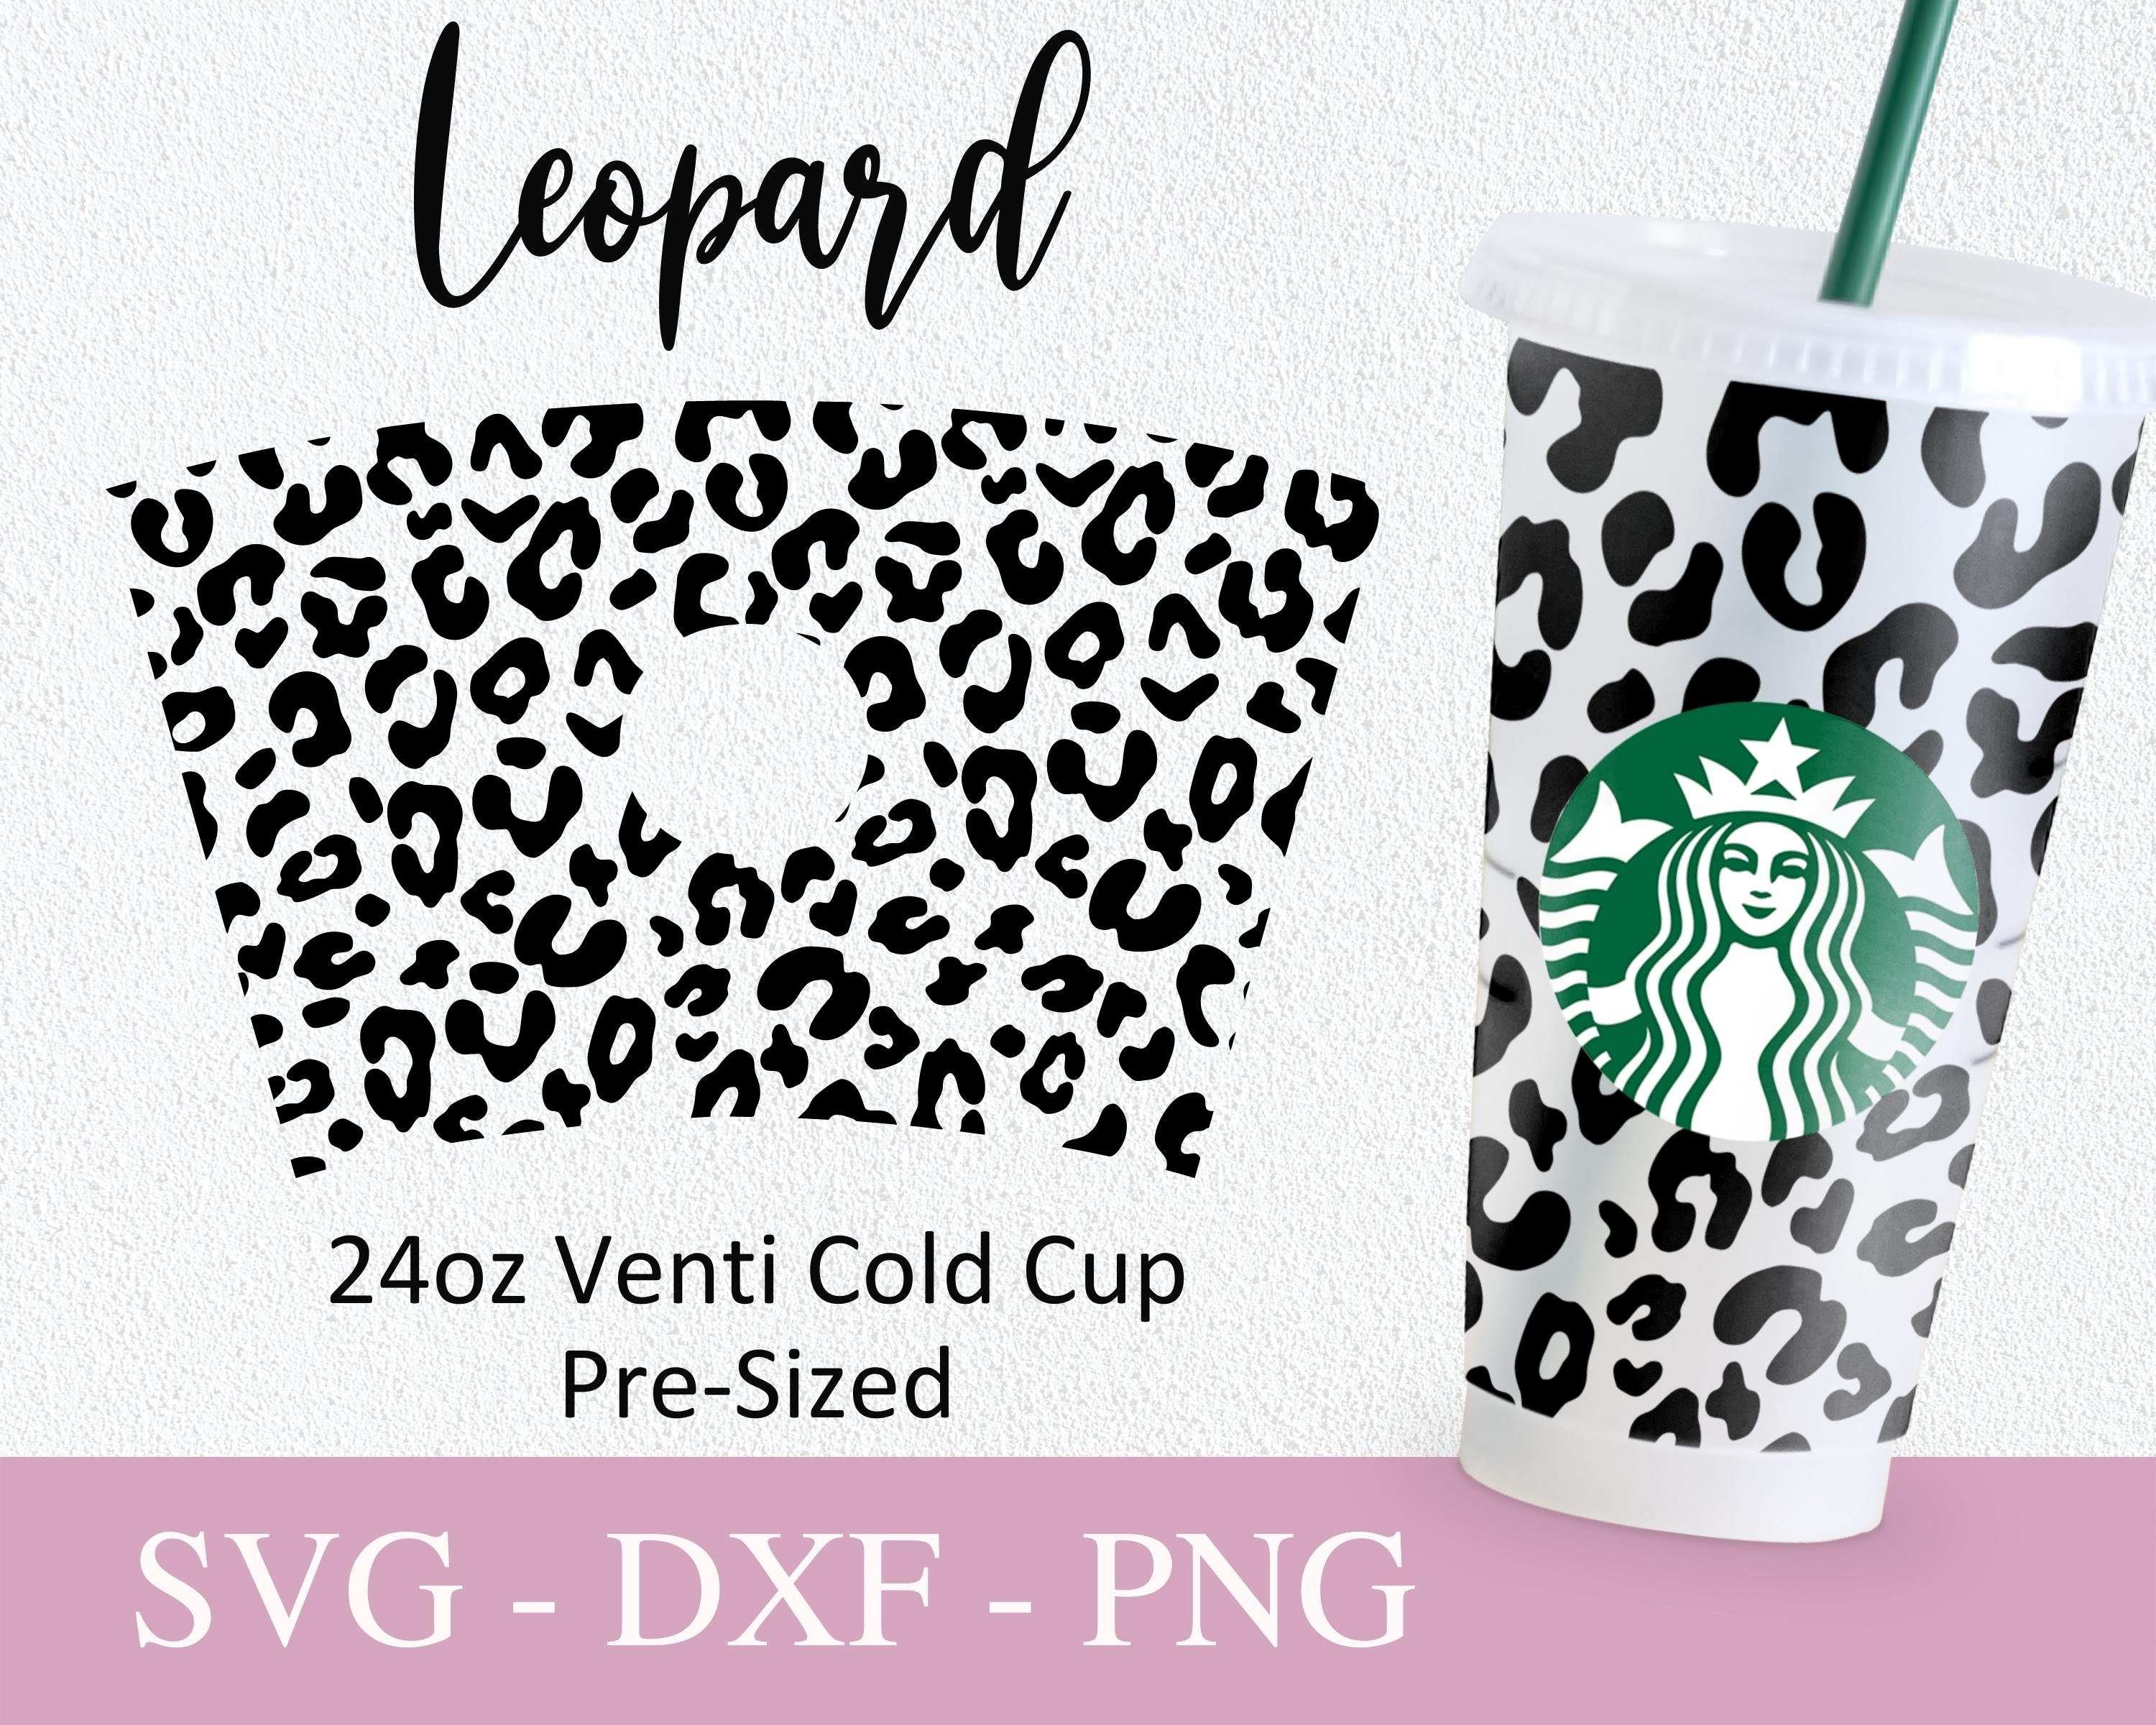 Starbucks Cup SVG - Peace Sign Starbucks SVG - Tess Made It